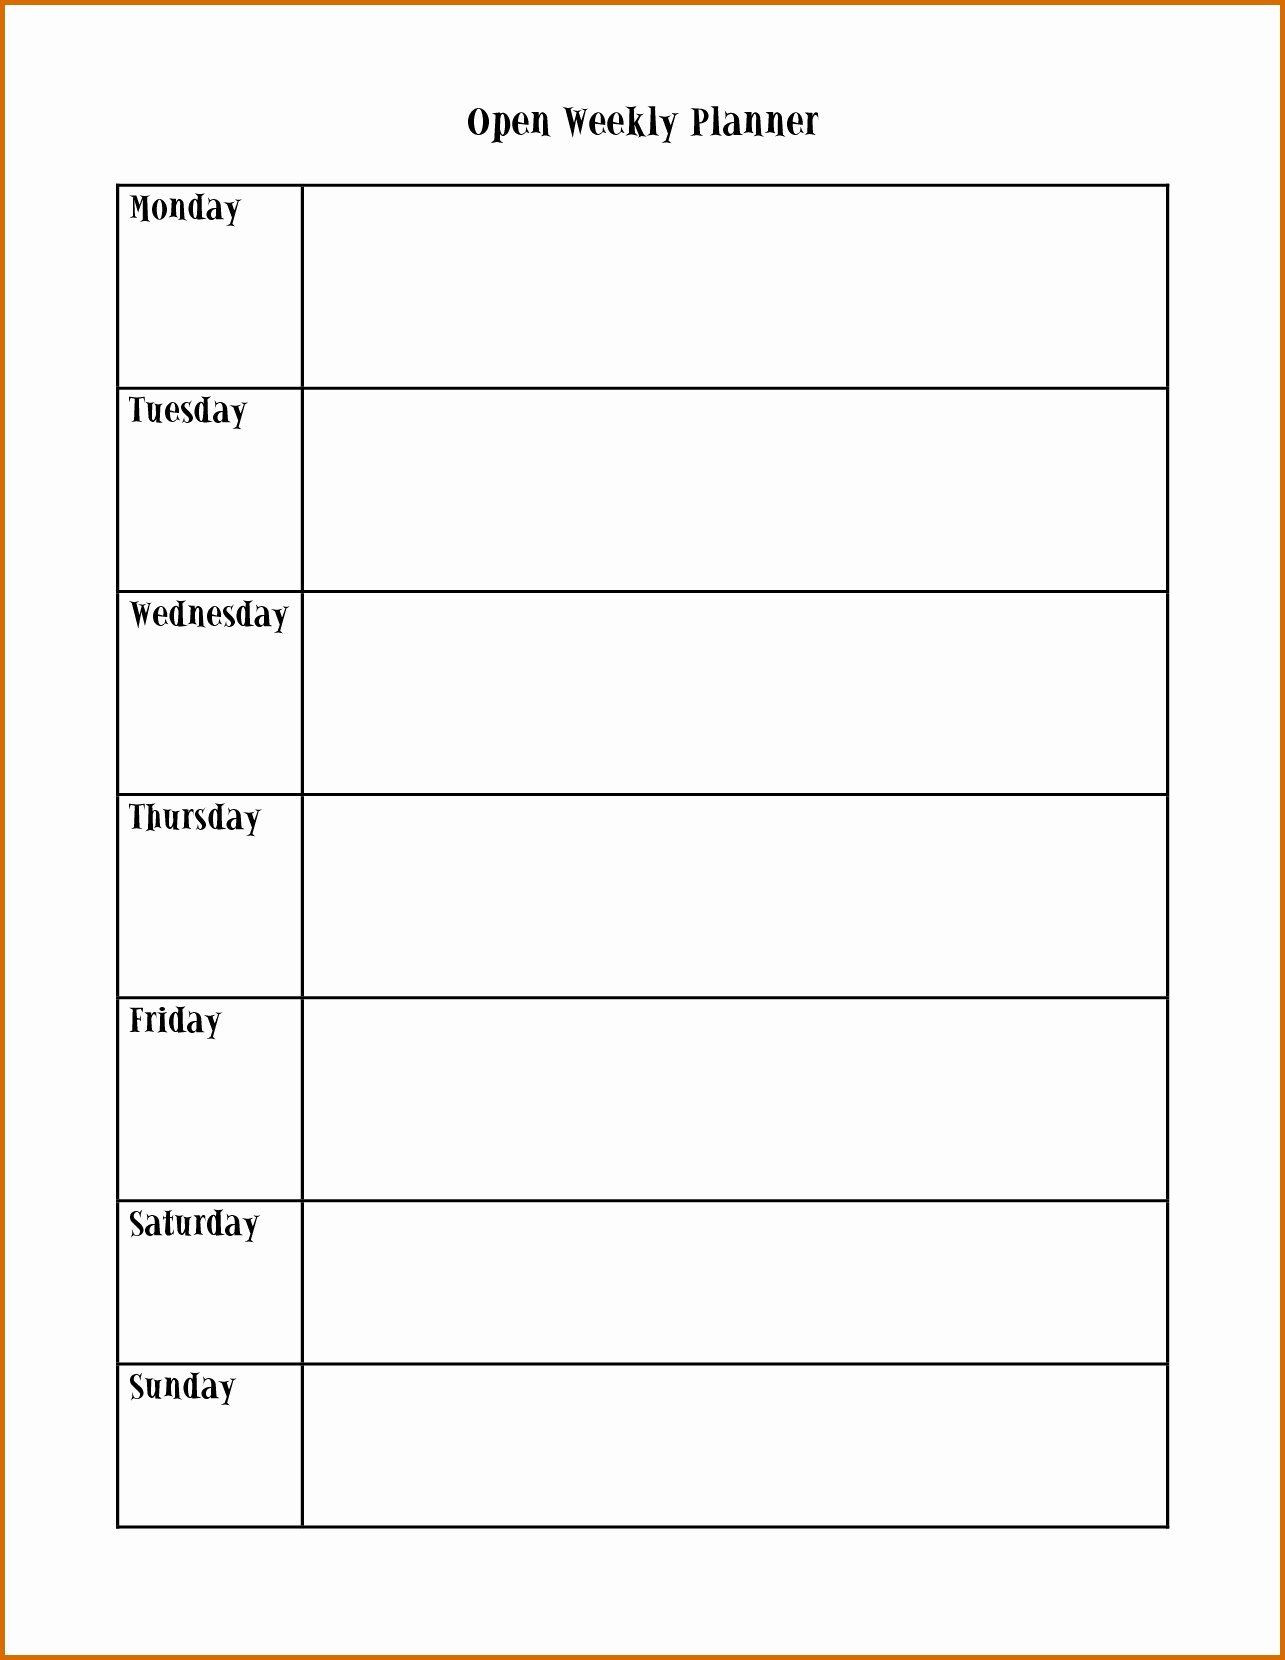 Weekly Calendar Monday Through Friday In 2020 | Monthly-Saturday Through Sunday Calendar